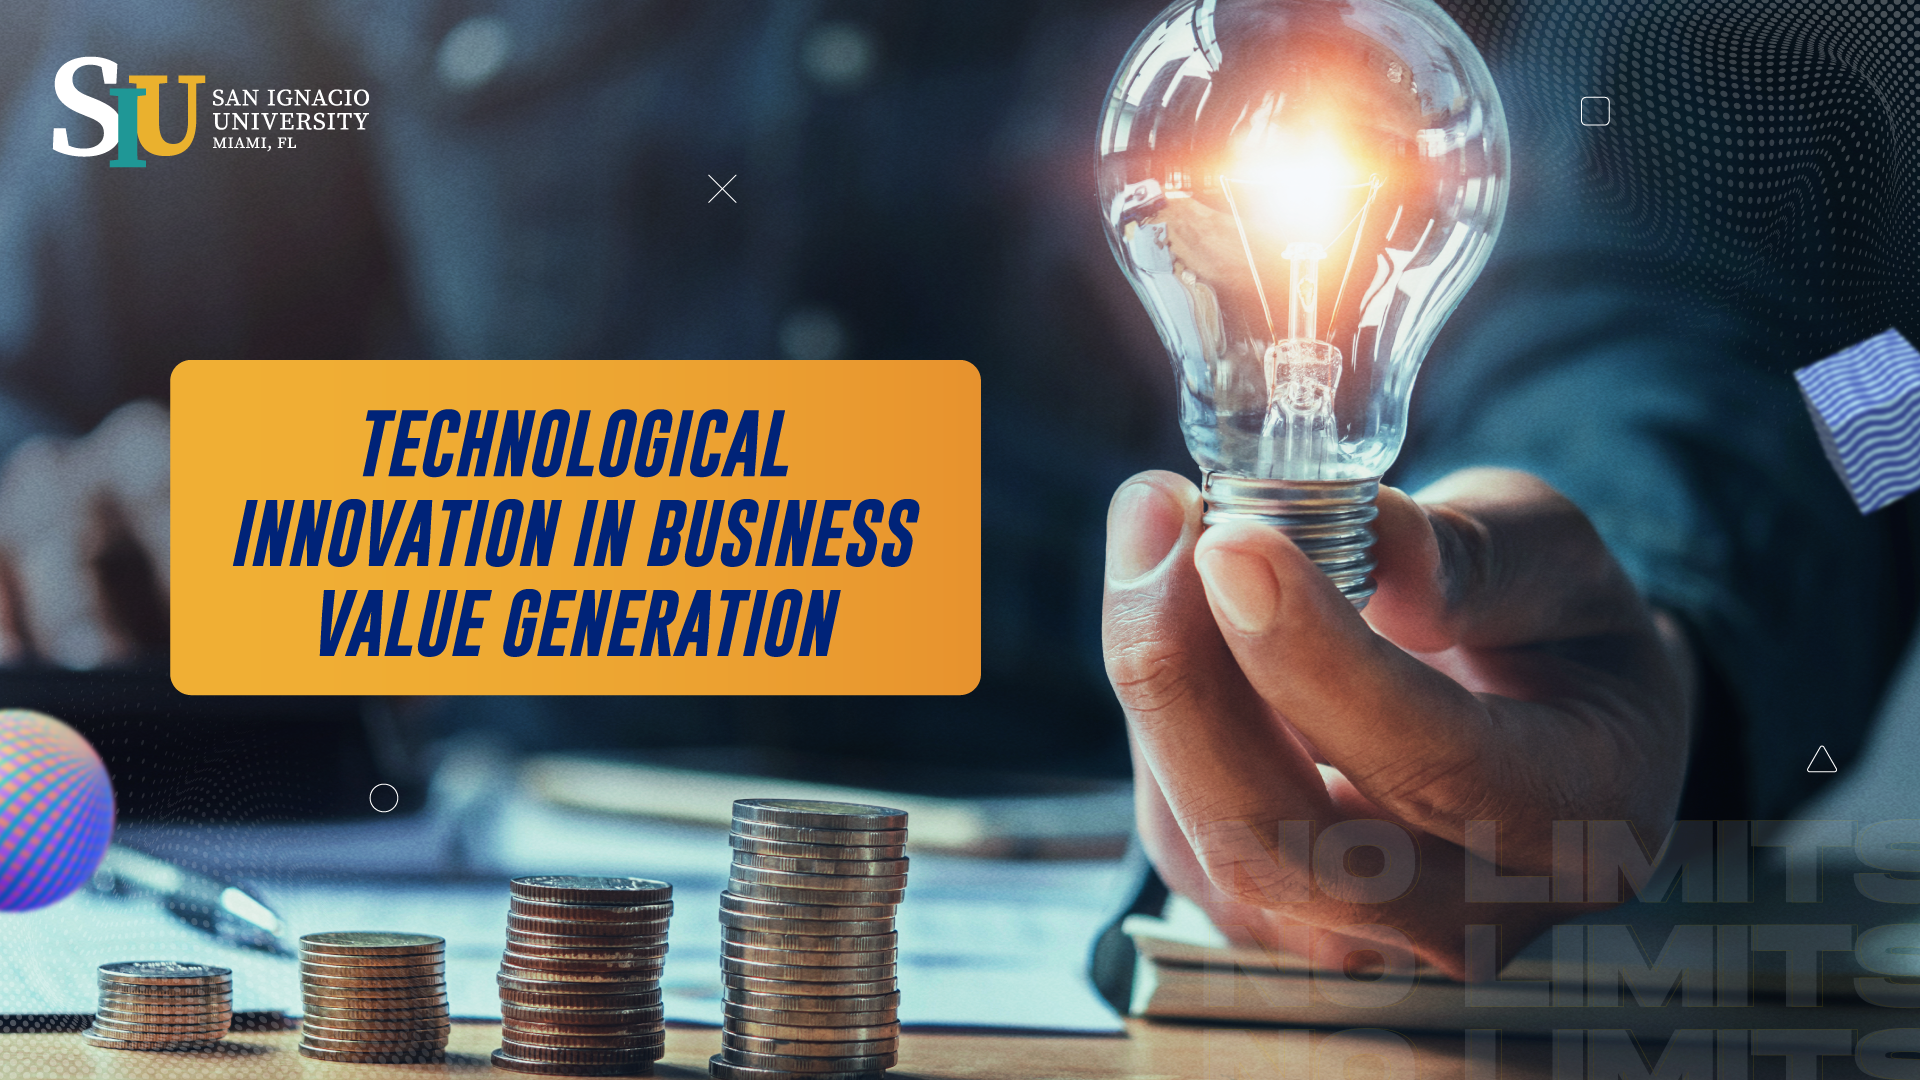 Technological Innovation in Business Value Generation by Leonardo Noblecilla